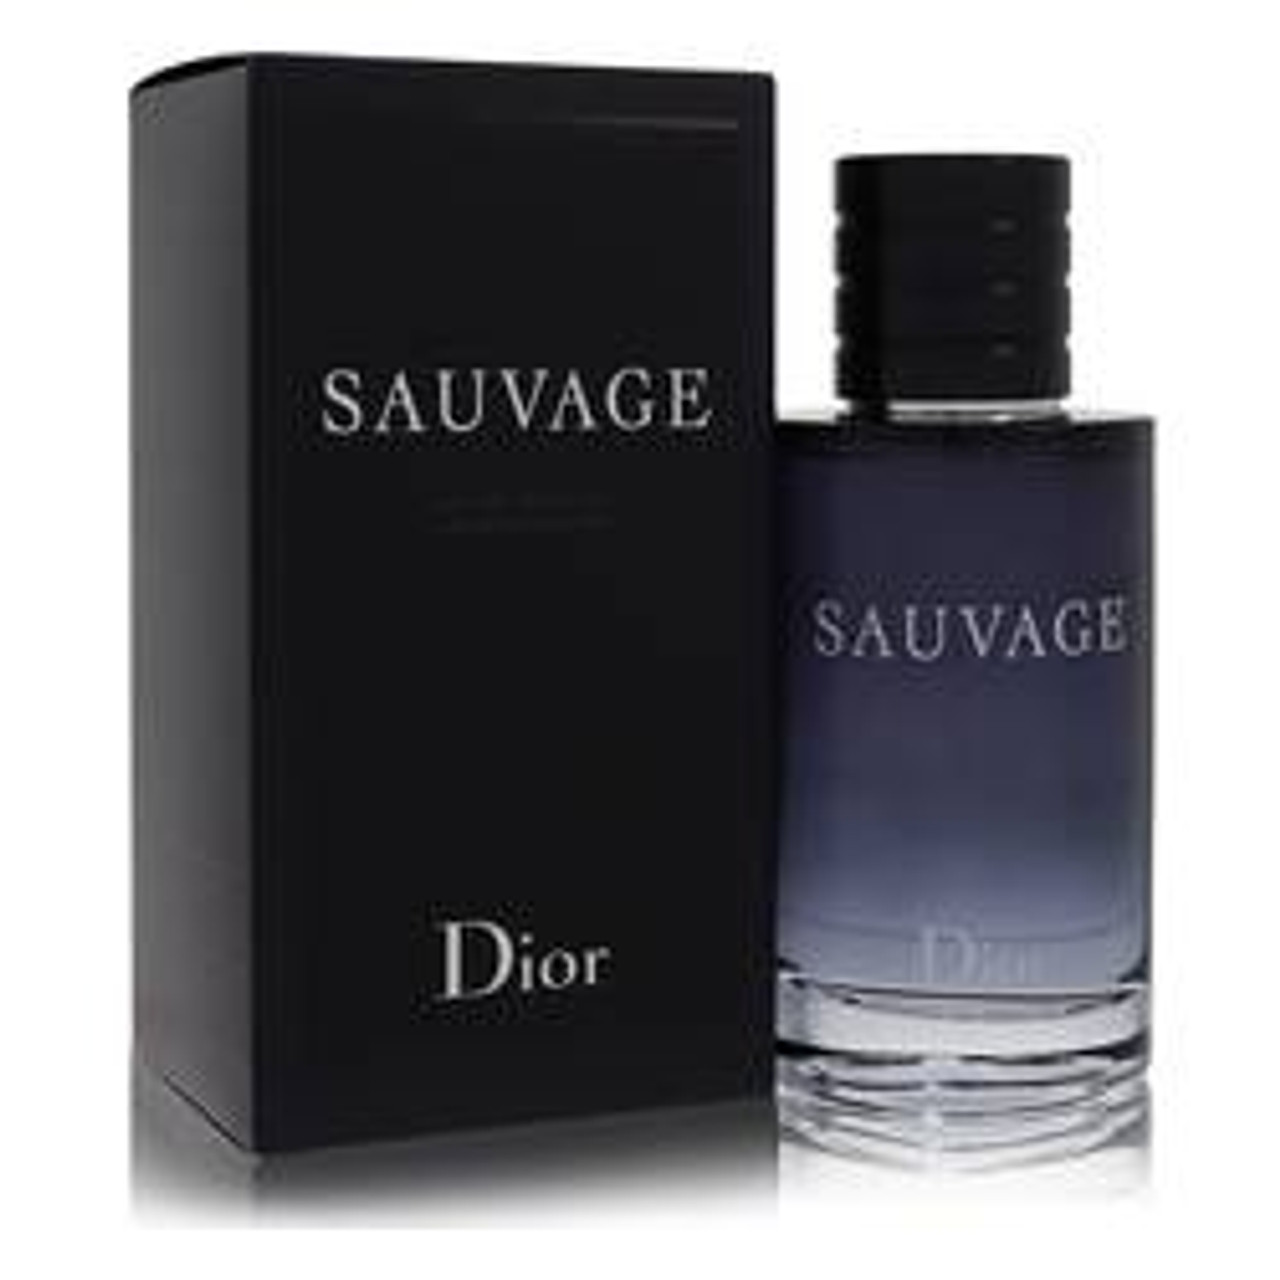 Sauvage Cologne By Christian Dior Eau De Toilette Spray 3.4 oz for Men - *Pre-Order